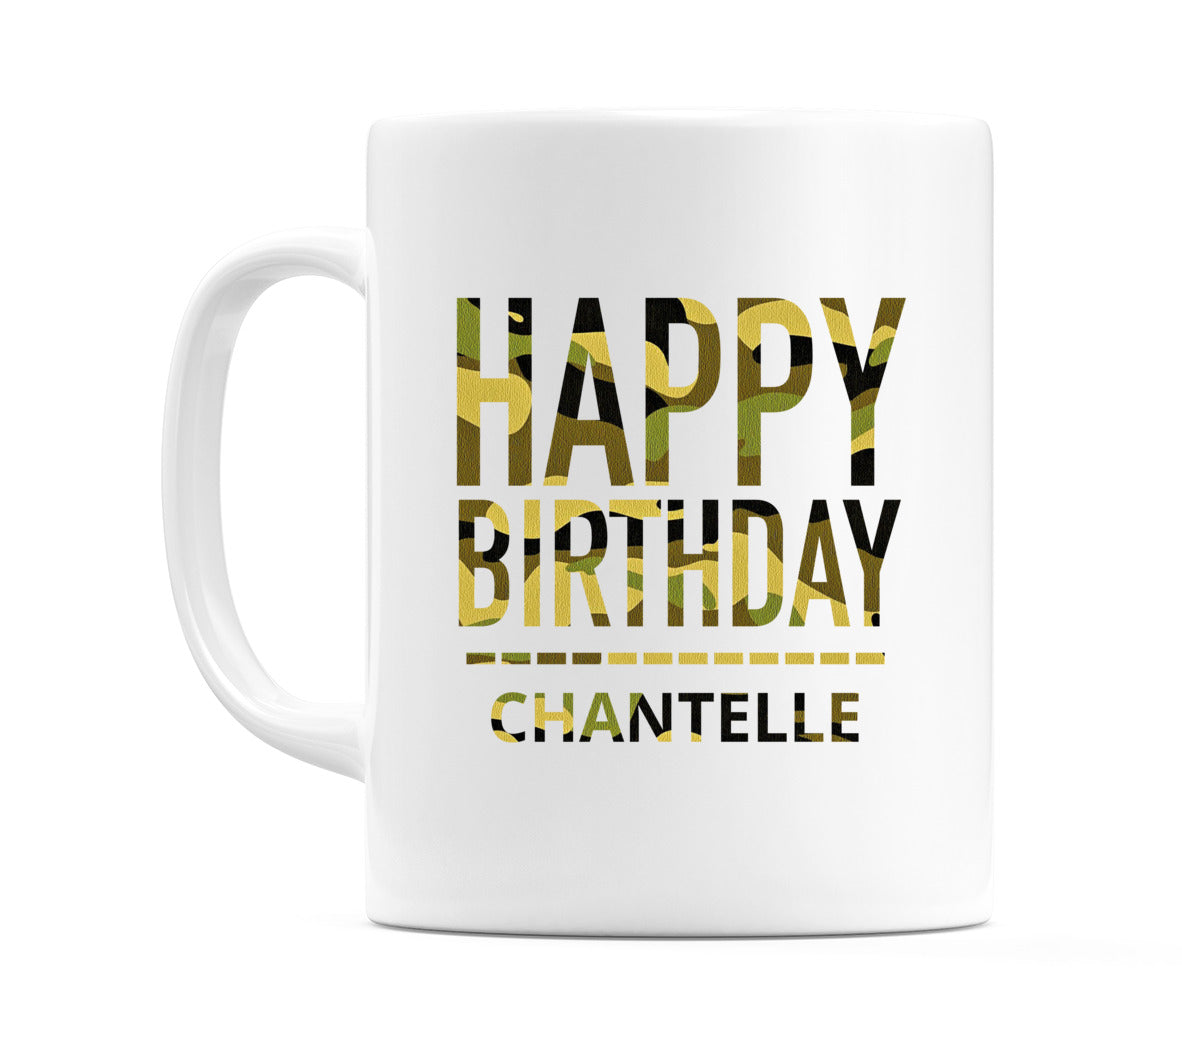 Happy Birthday Chantelle (Camo) Mug Cup by WeDoMugs